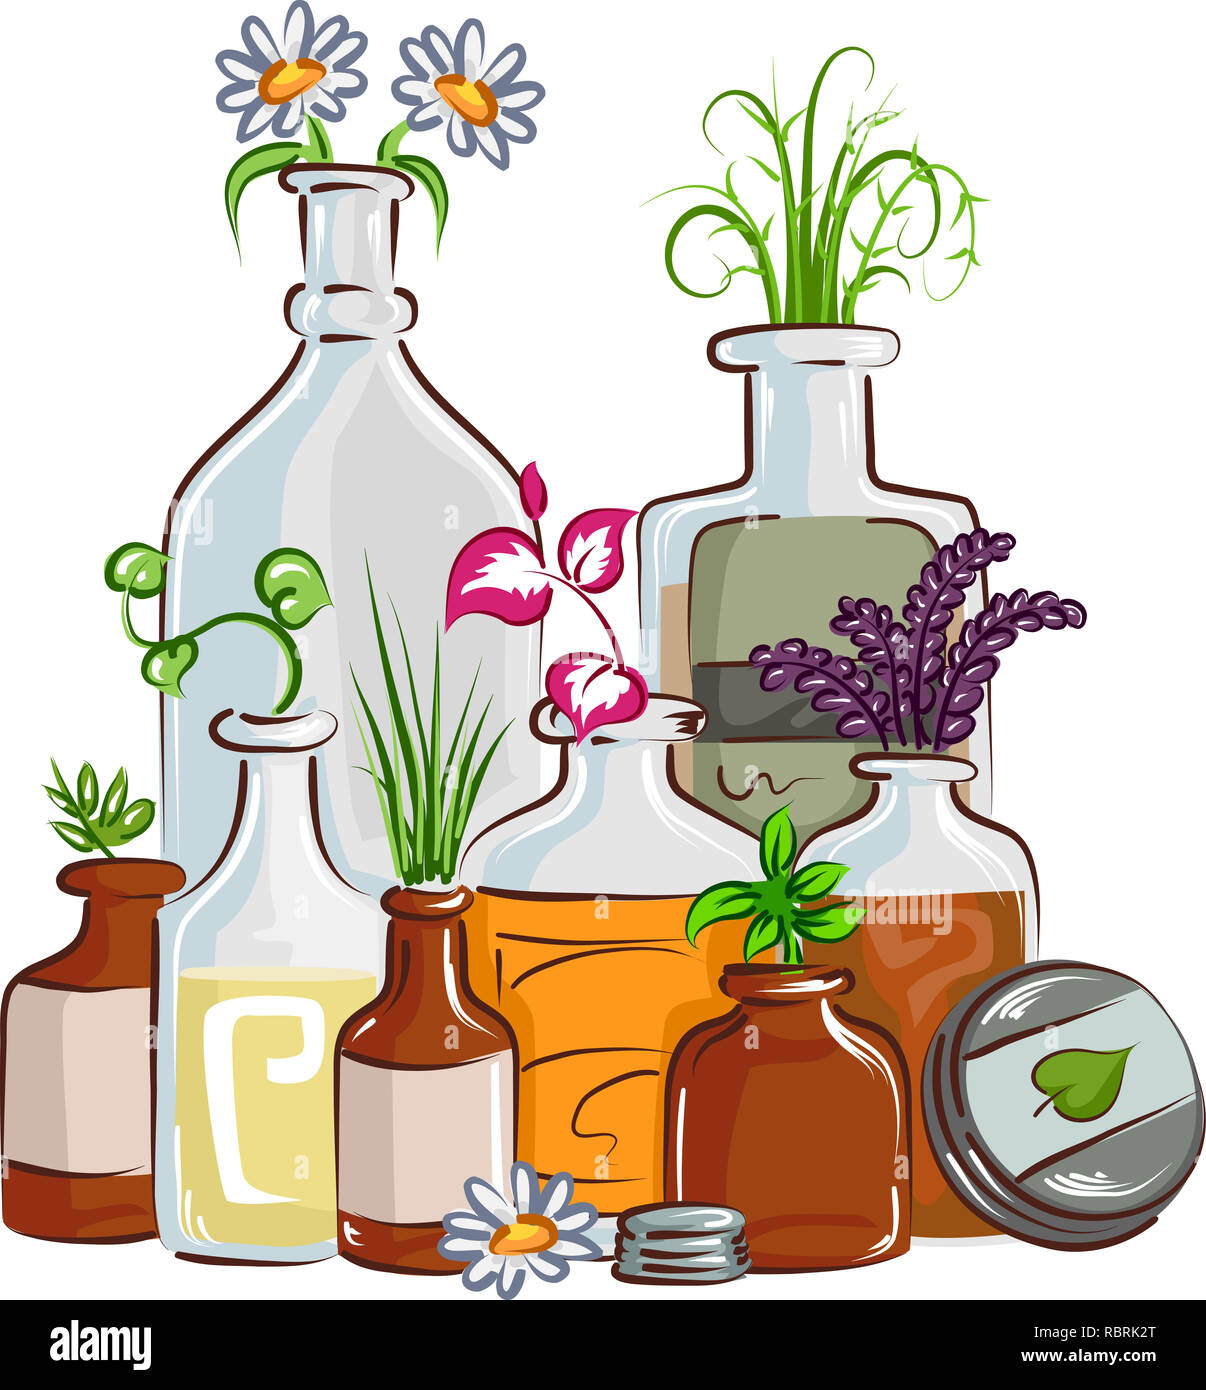 Illustration of Different Herbal Plants Growing Inside Bottles. Herbal Medicine Concept Stock Photo